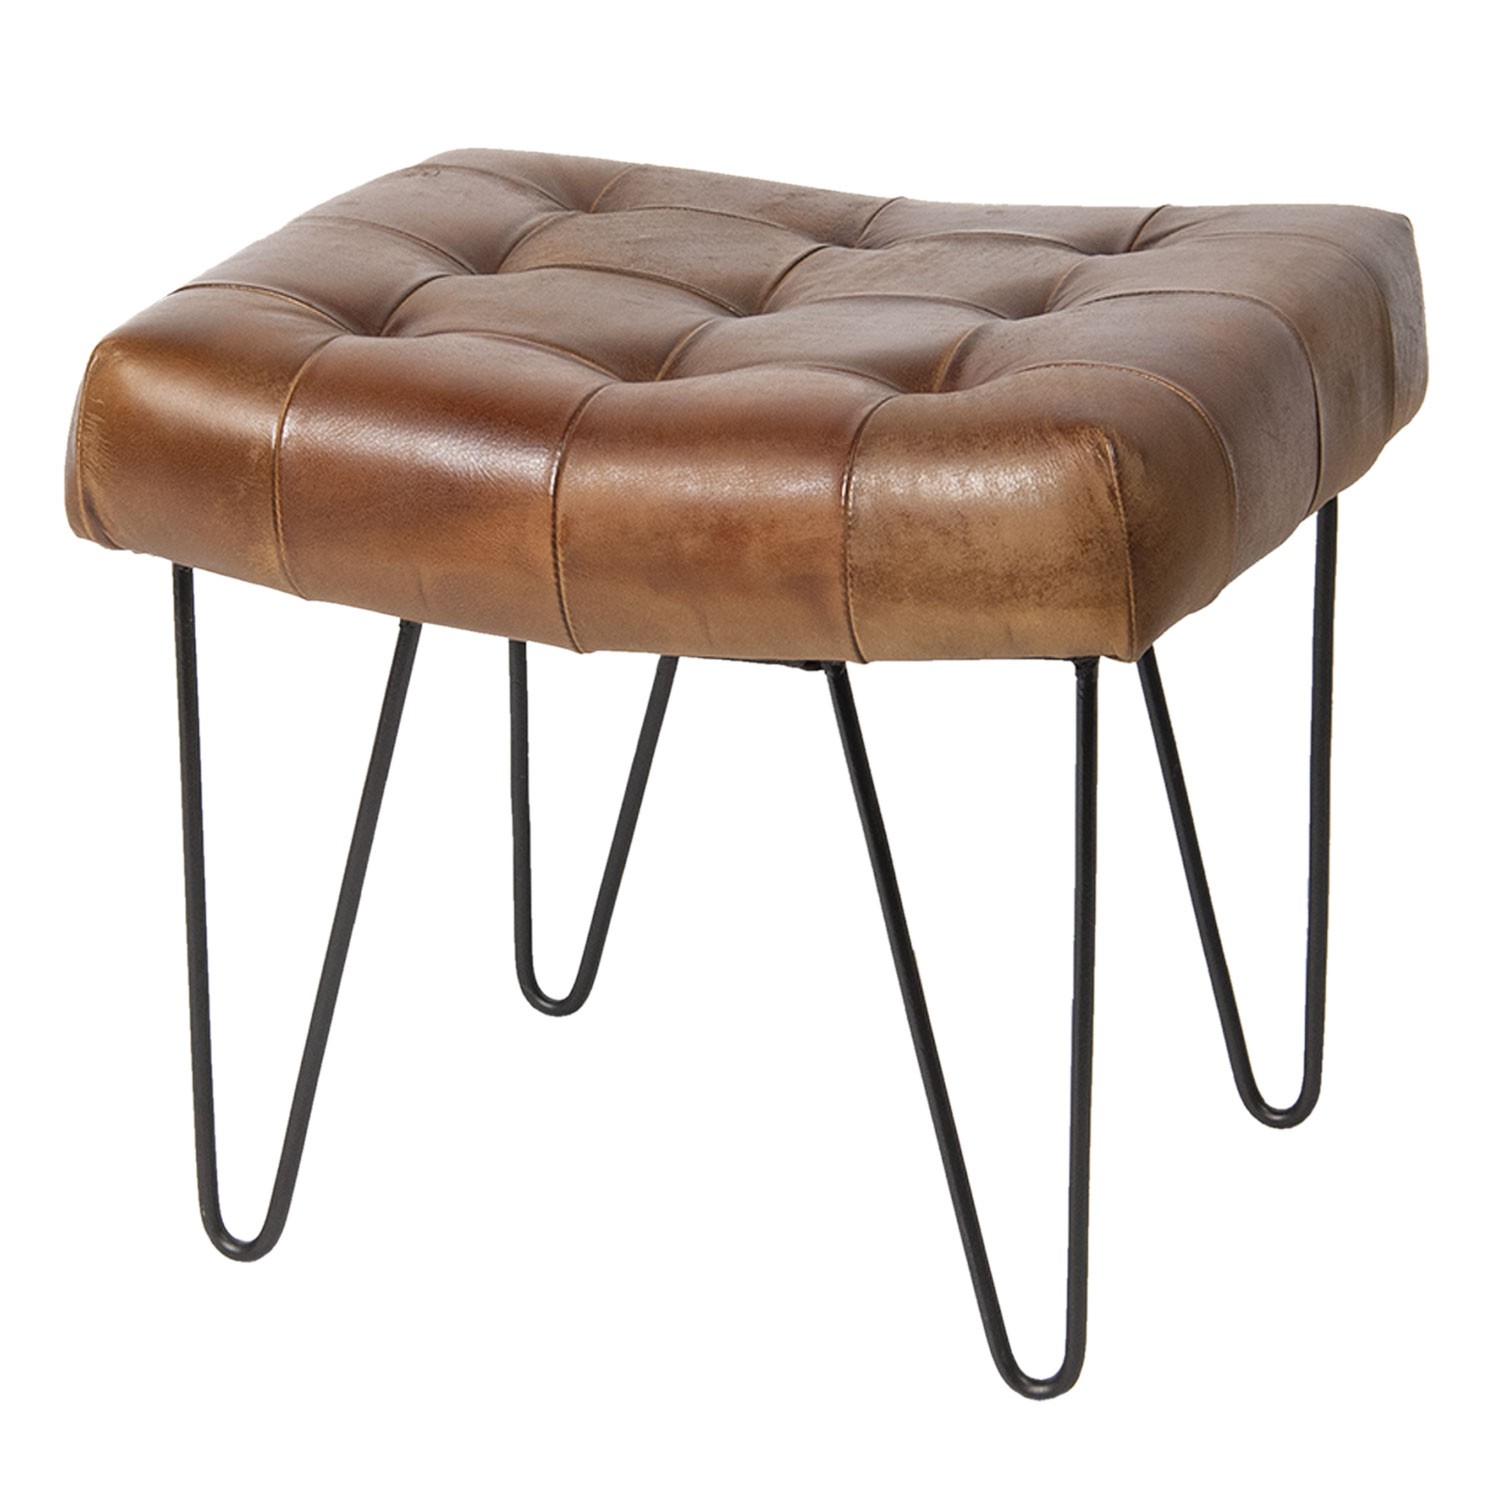 Hnědá kožená stolička / podnožka Alienor - 58*48*48 cm Clayre & Eef